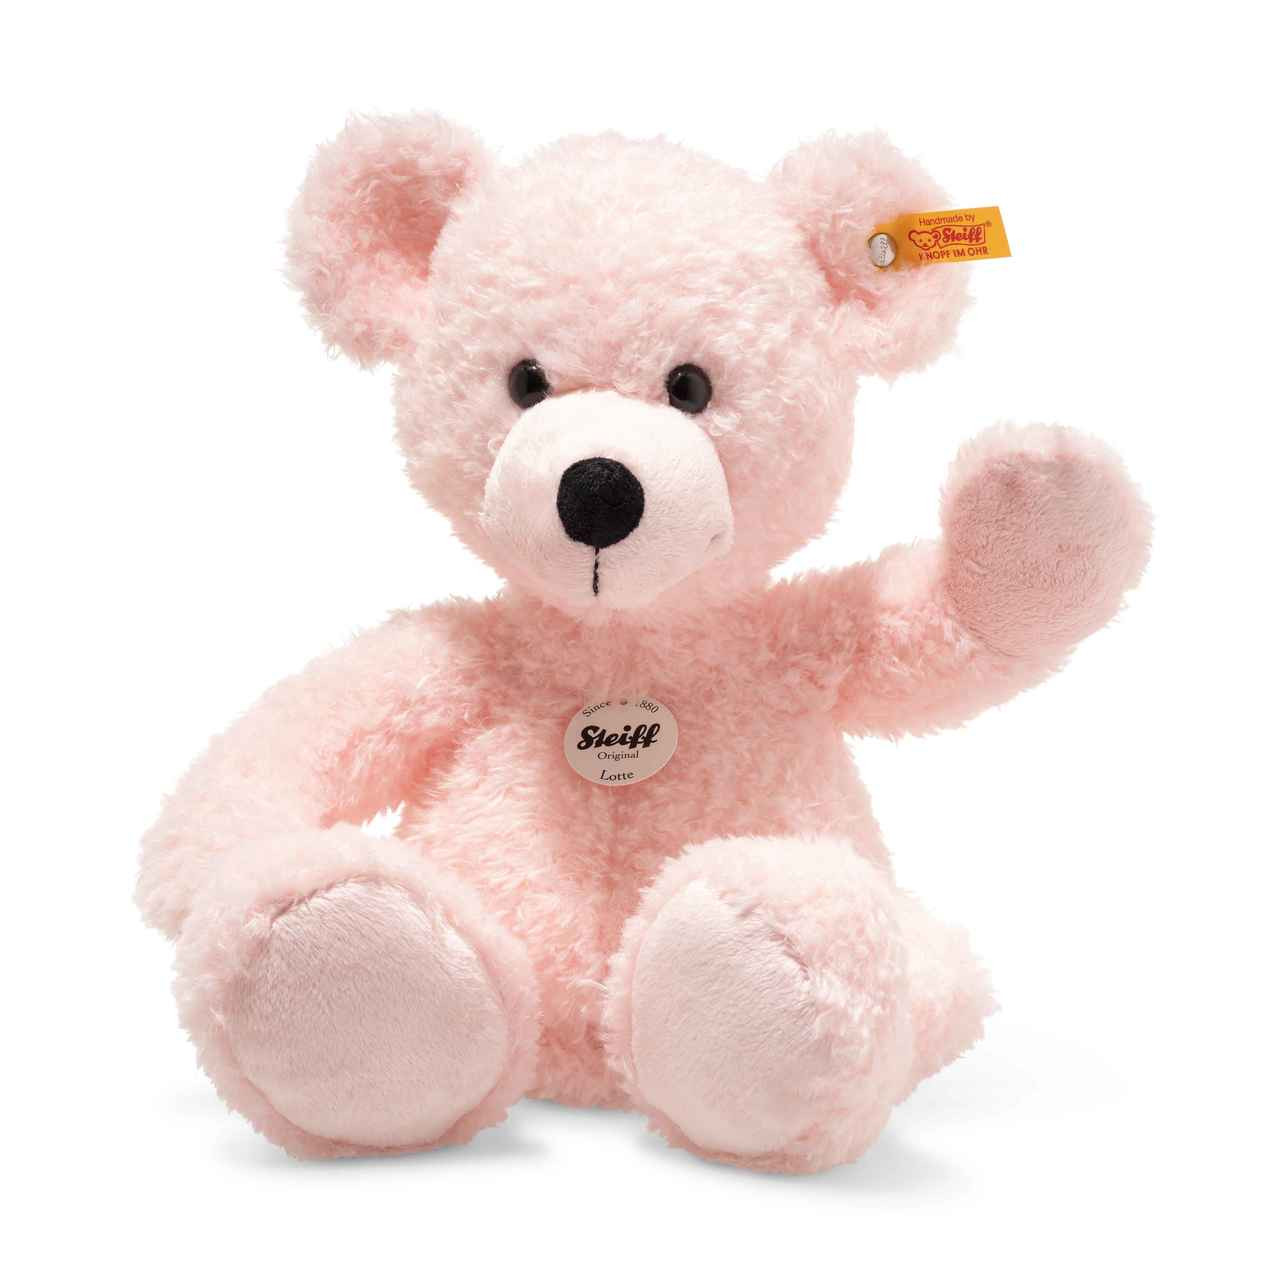 pink teddy bear online shopping